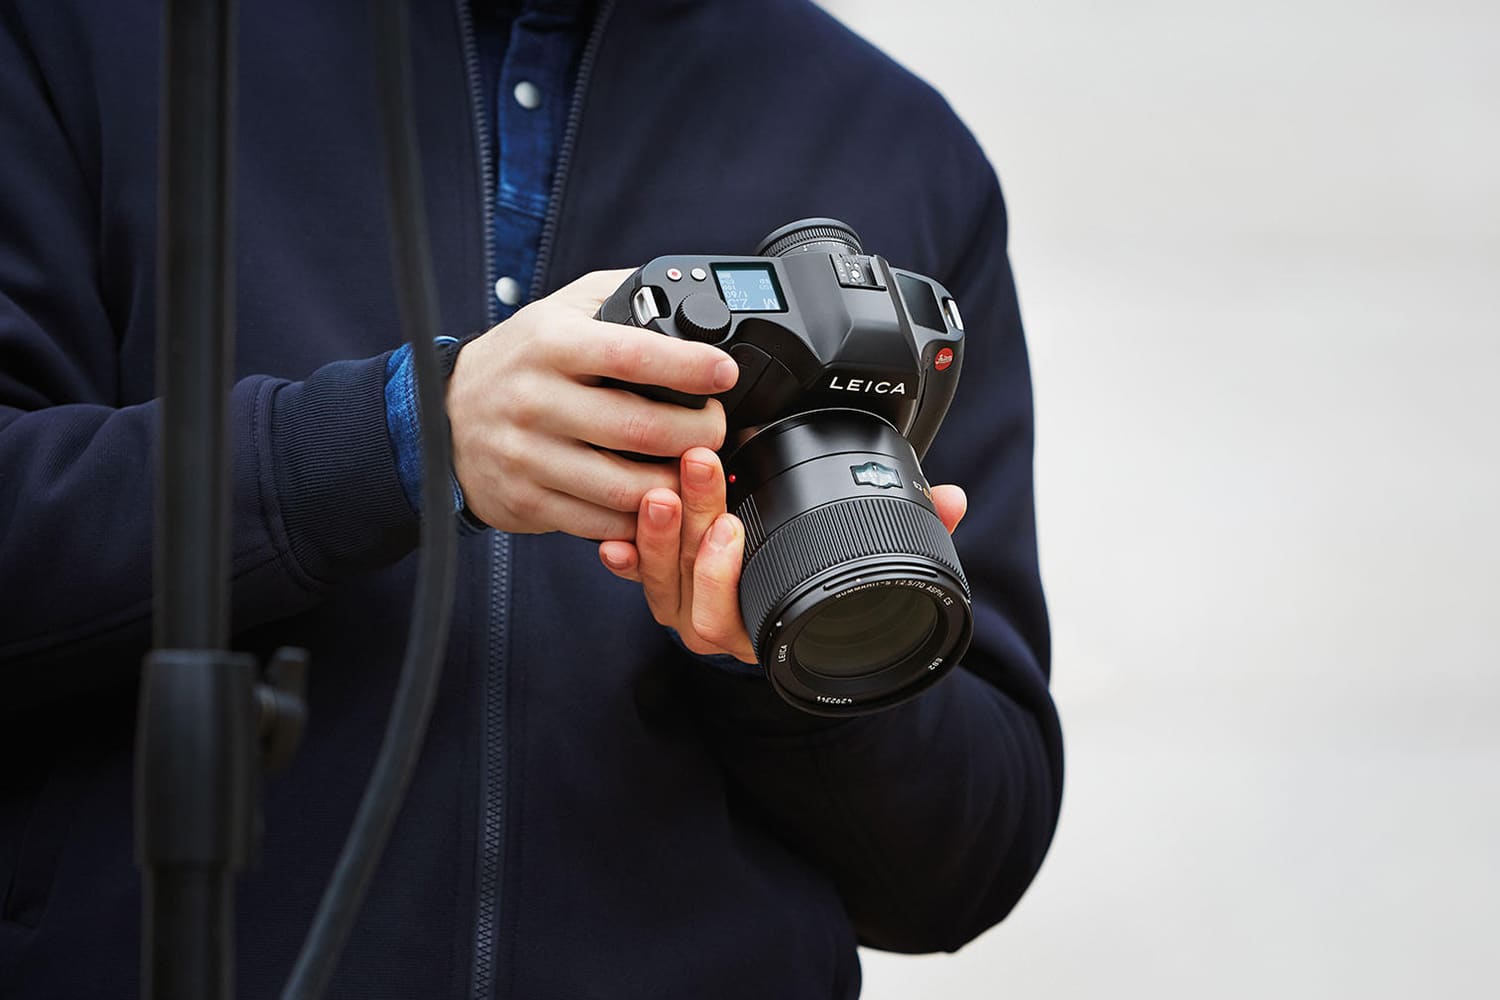 Leica S3 medium format DSLR with 64 megapixels.